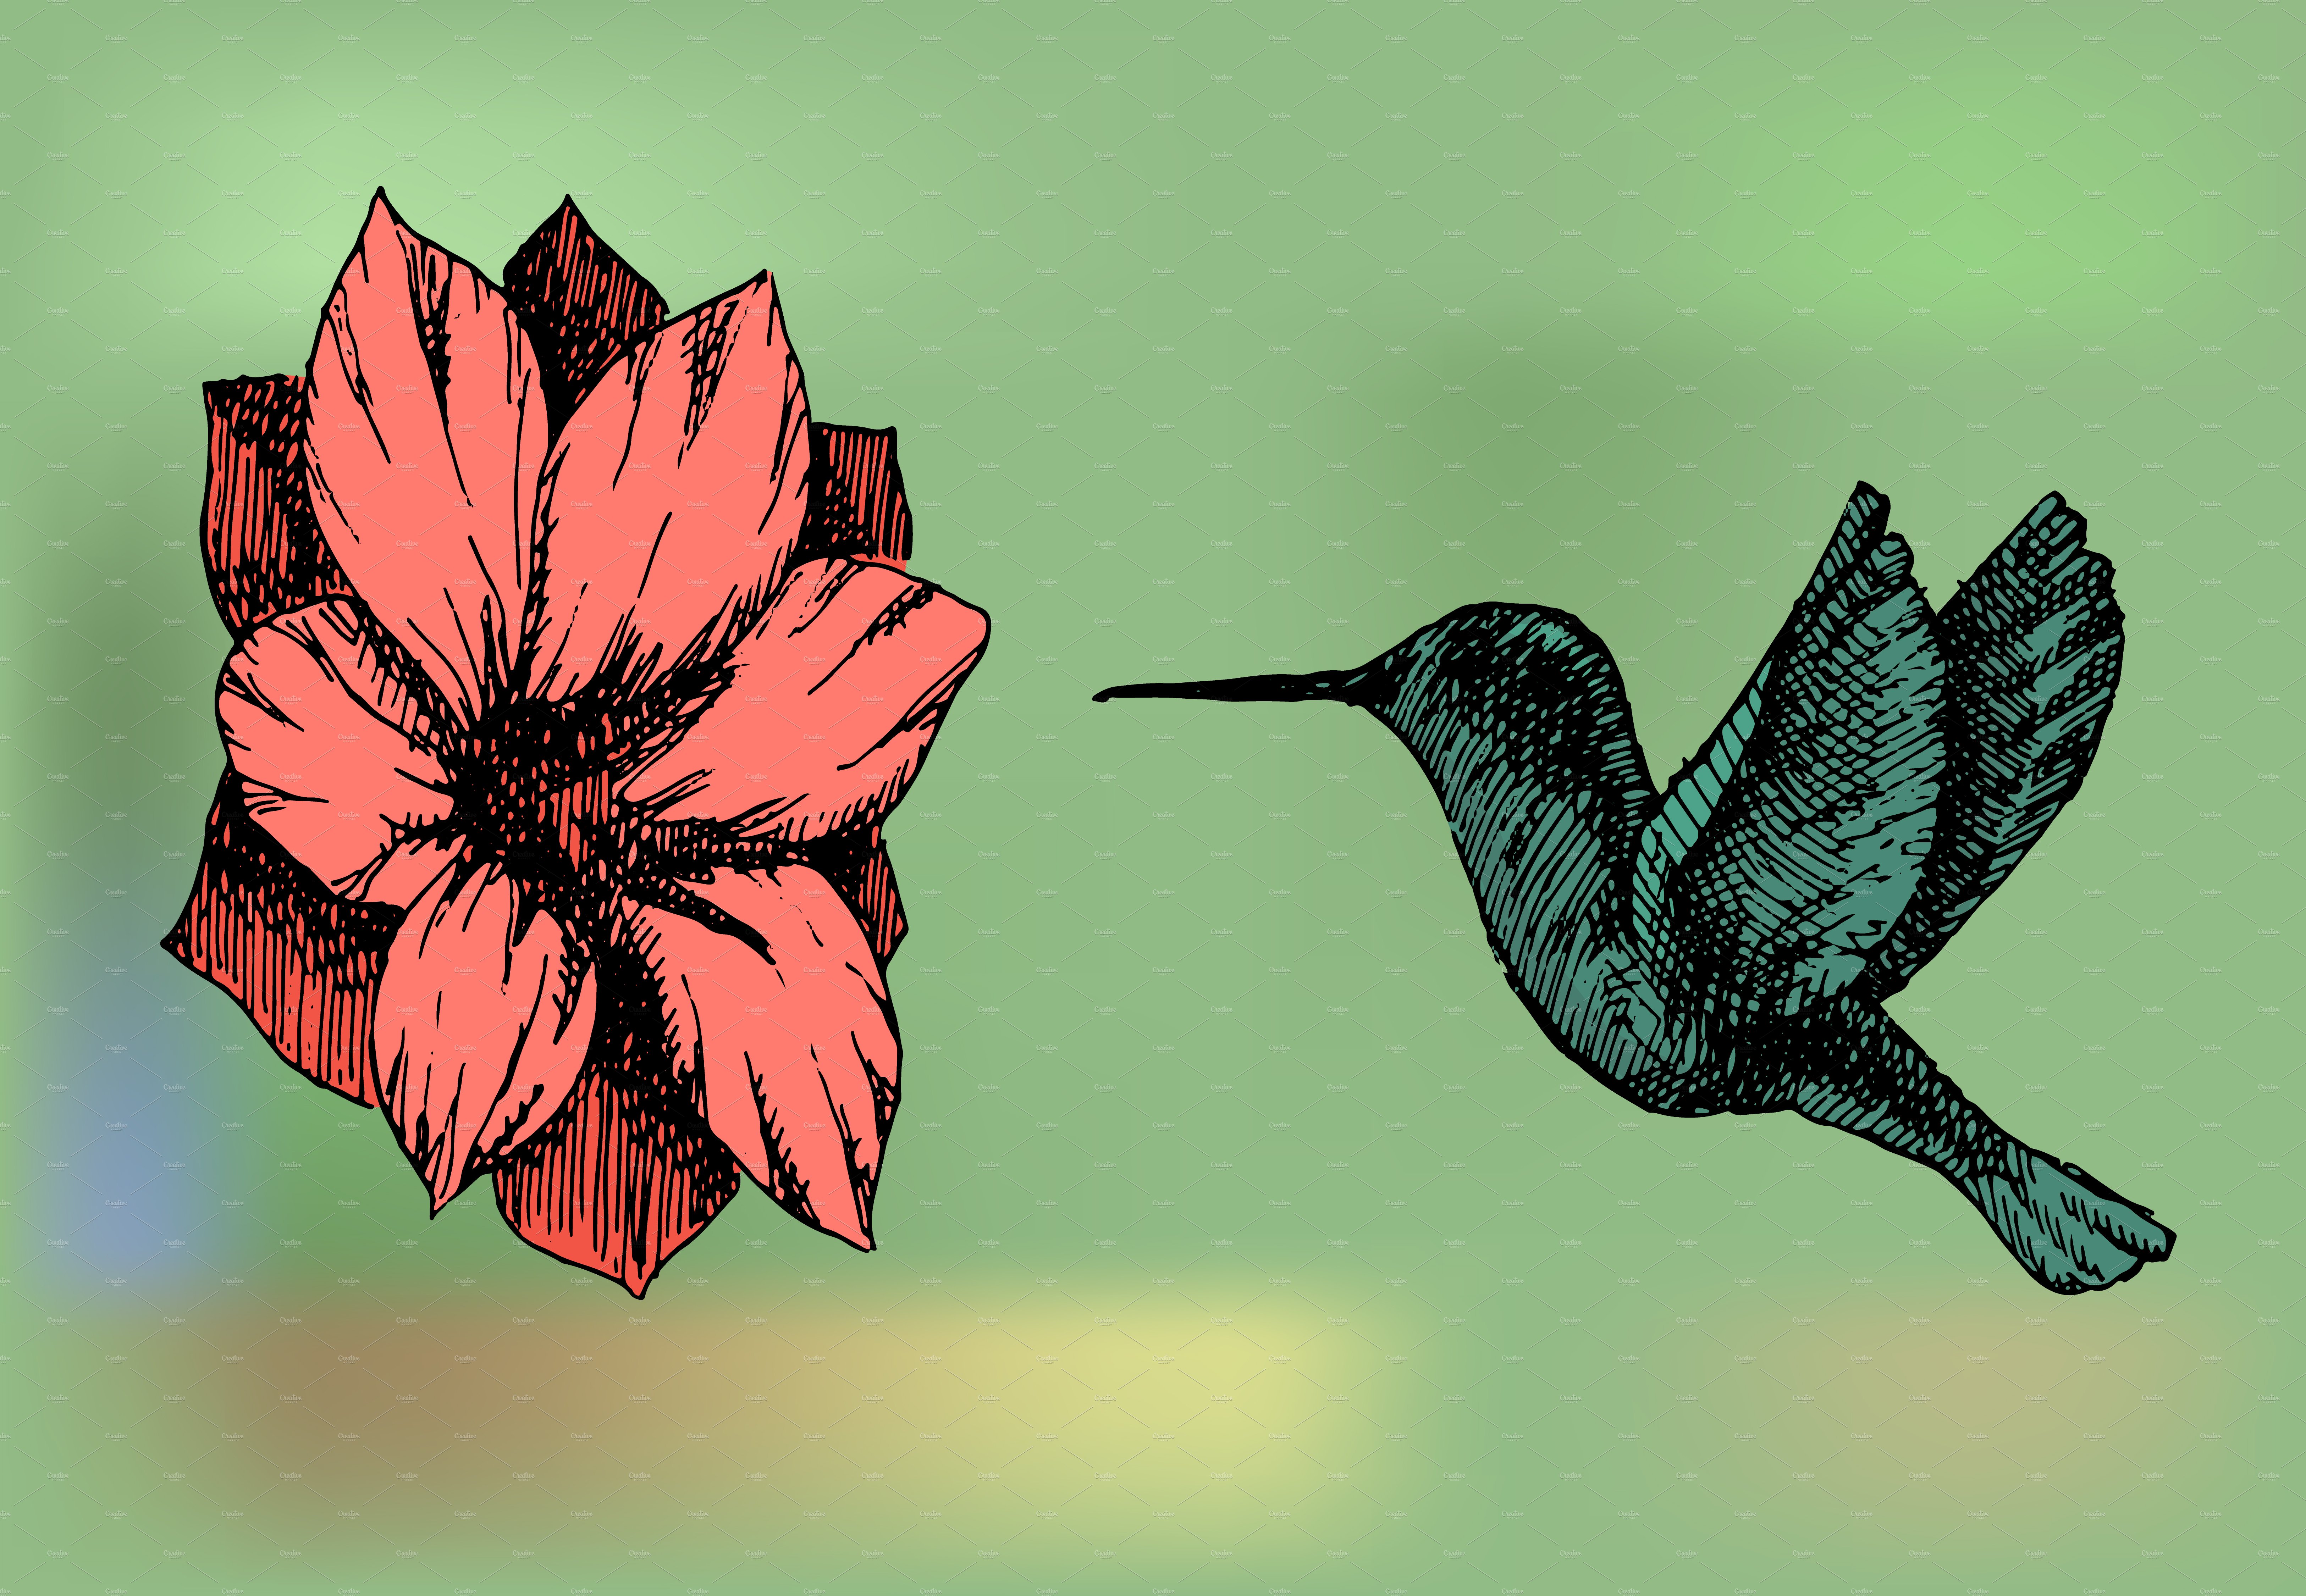 Hand drawn hummingbirds near flowers cover image.